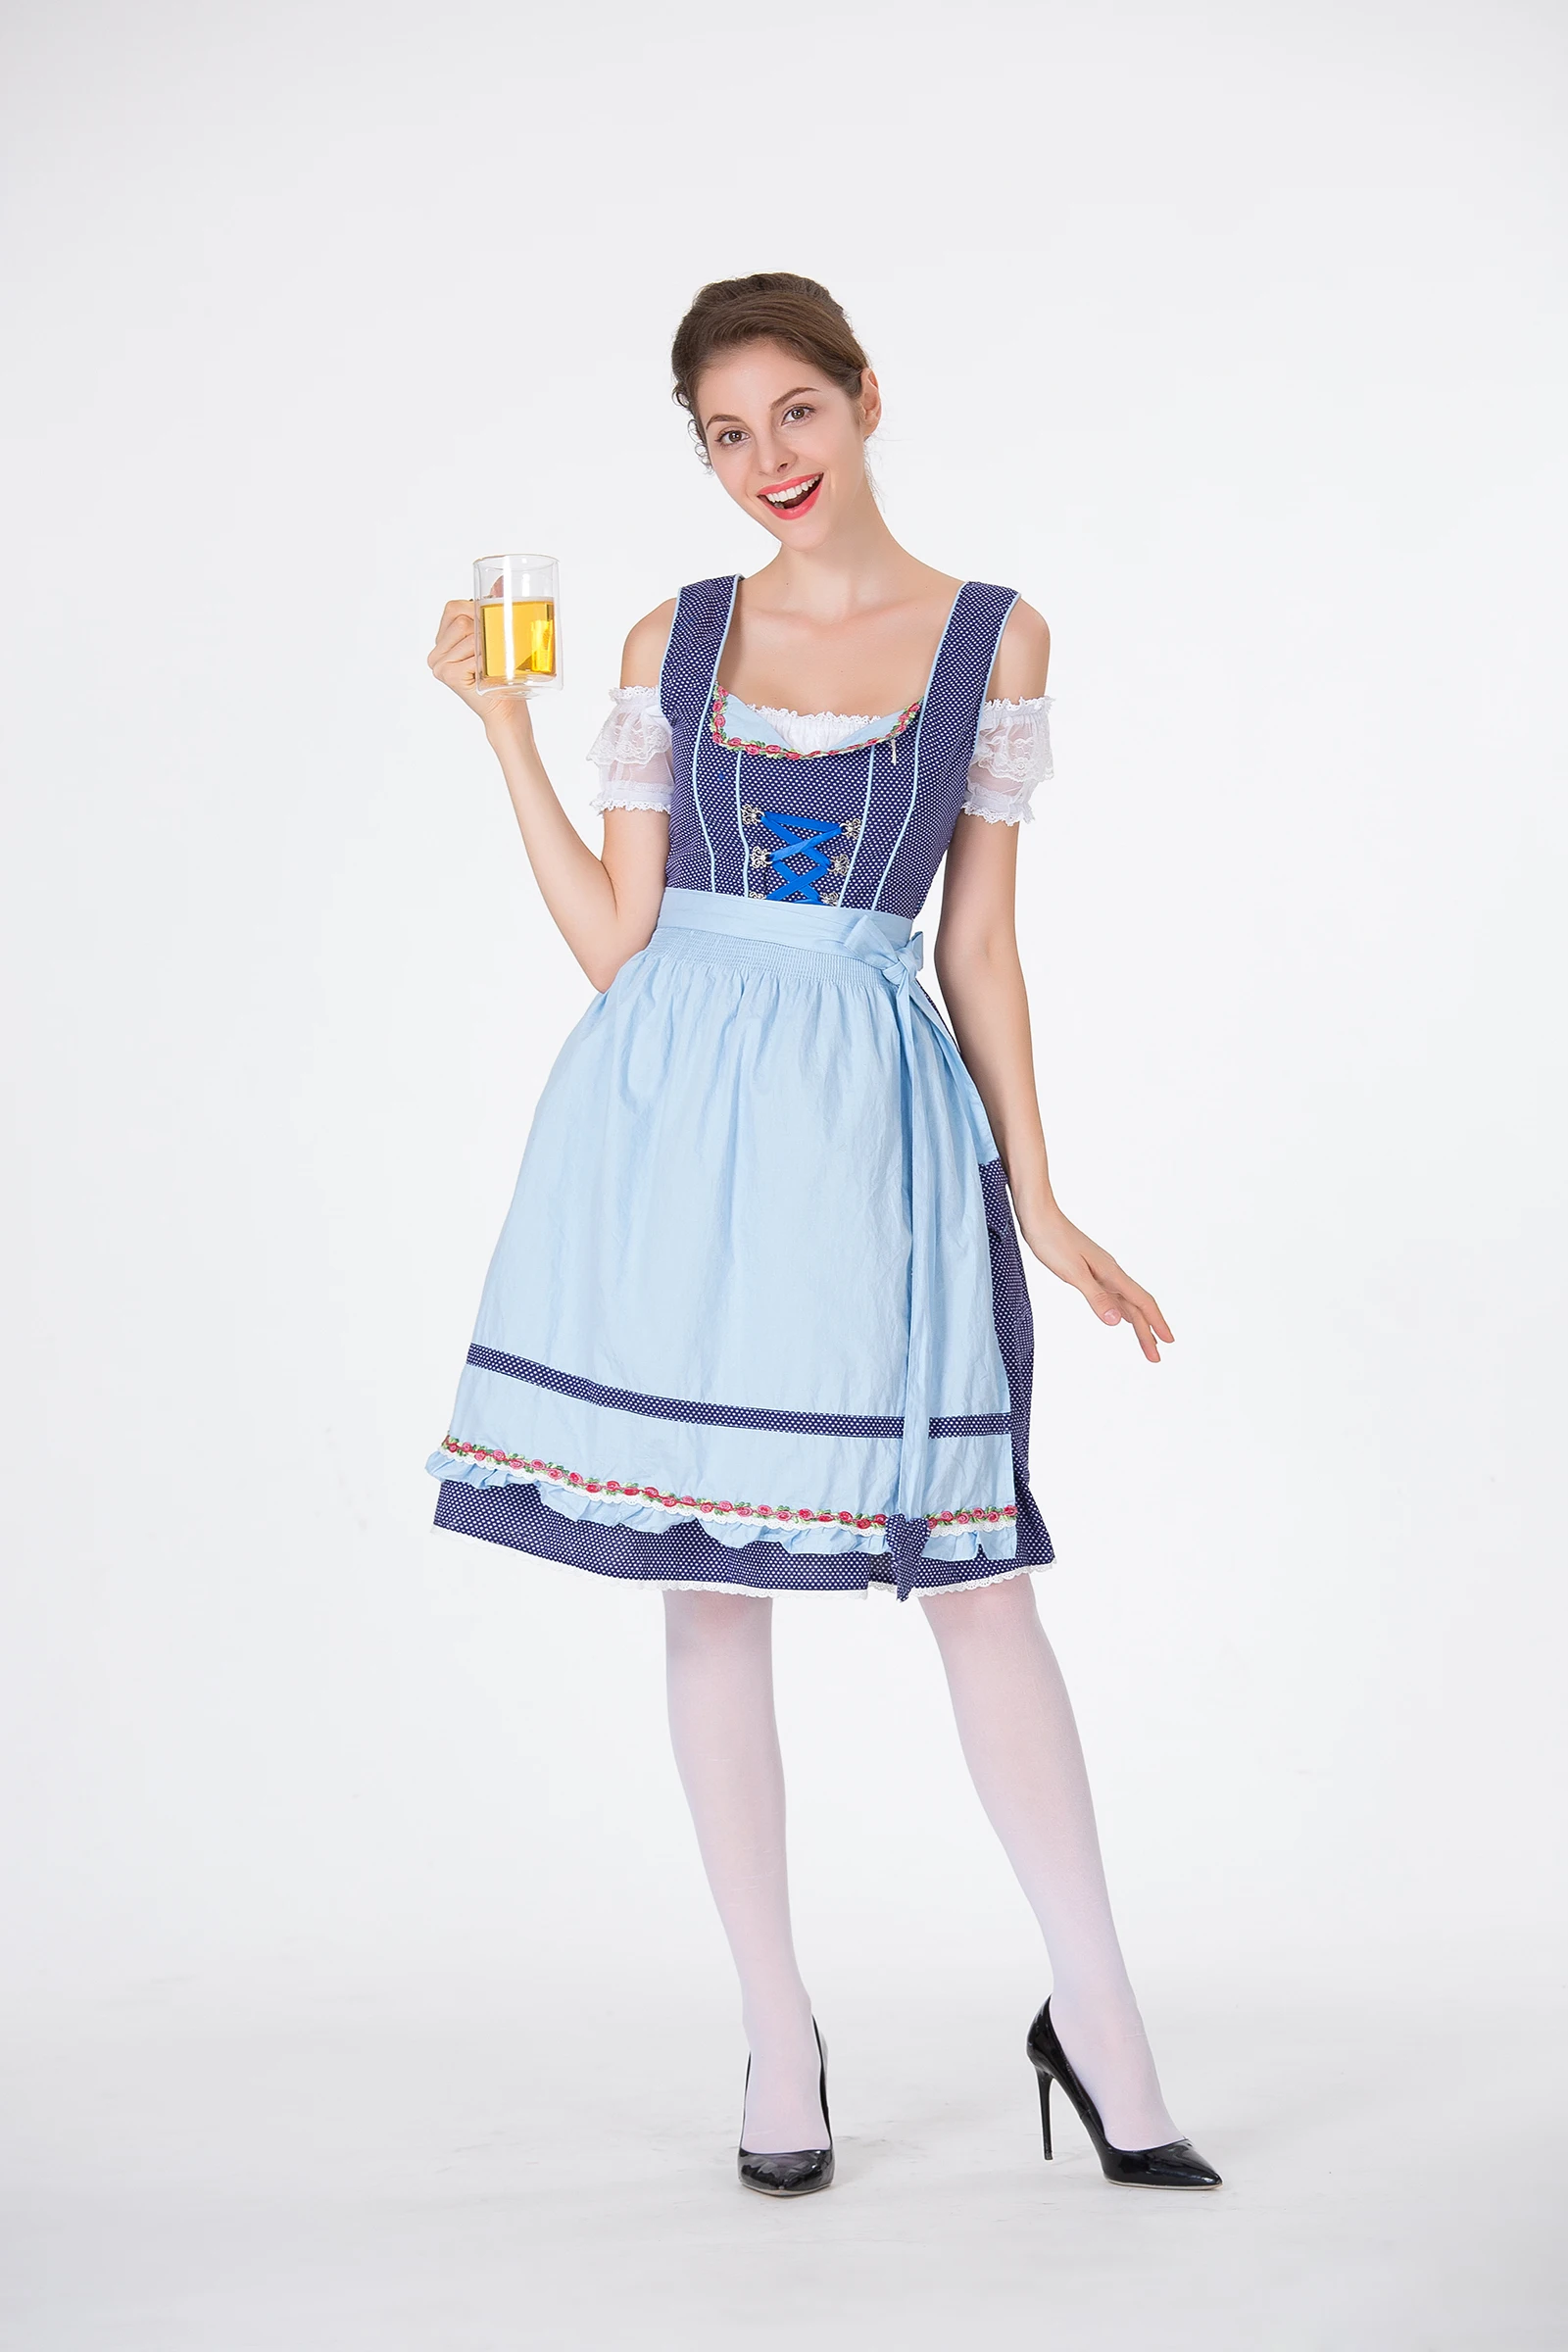 High Quality Adult Female Oktoberfest Maid Costume Cosplay Beer Girl Uniform Bavarian Dirndl